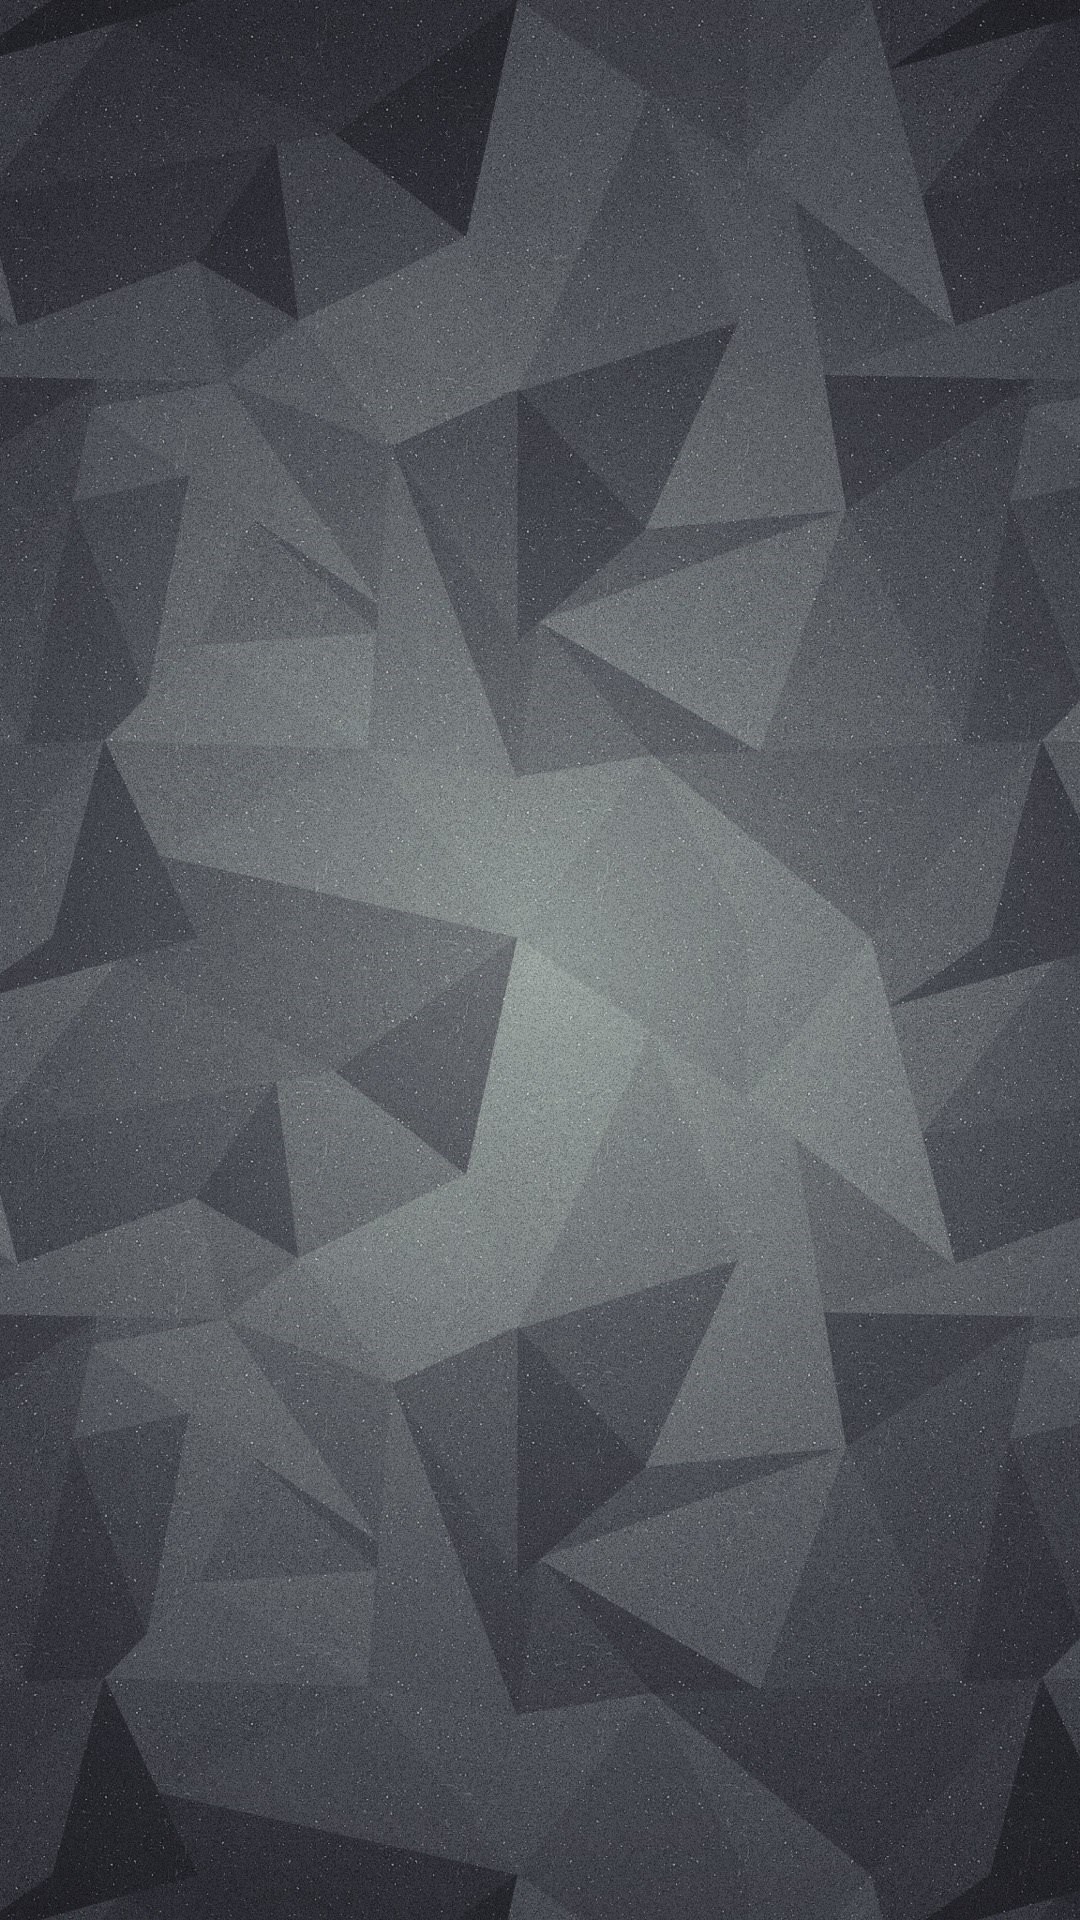 Gray iphone 6 wallpaper